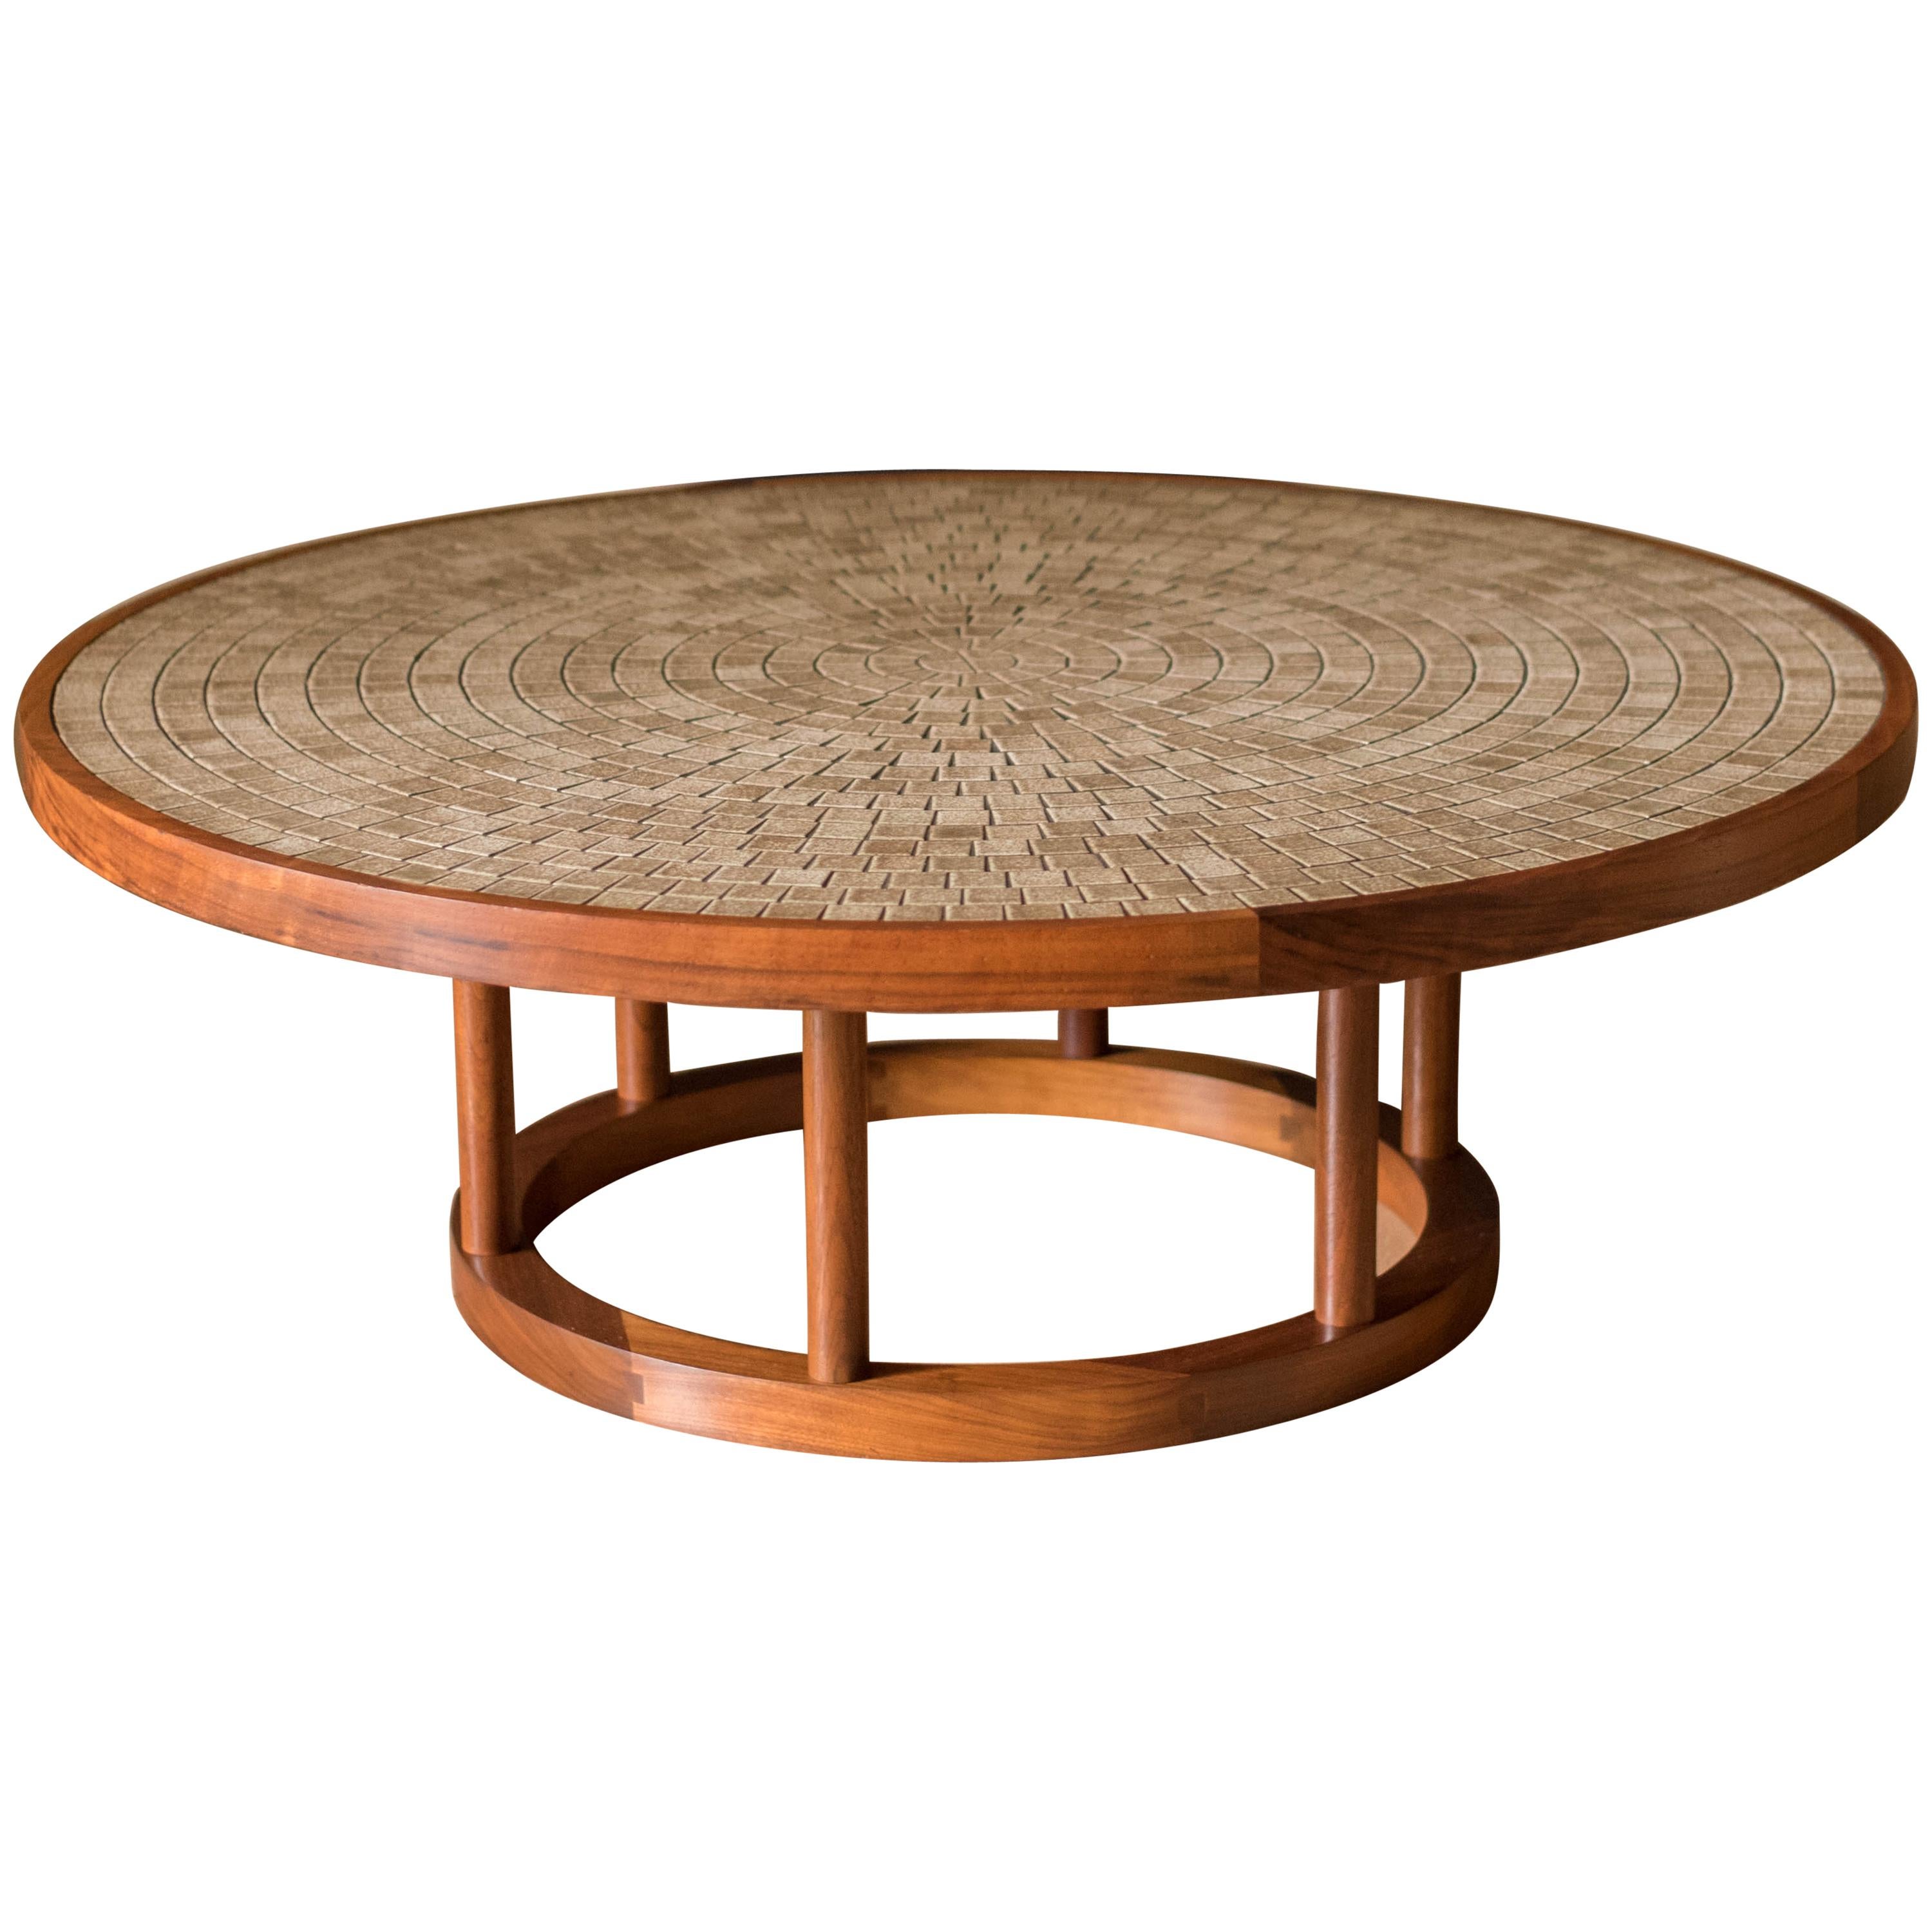 Vintage Martz Ceramic Tile and Walnut Pedestal Coffee Table